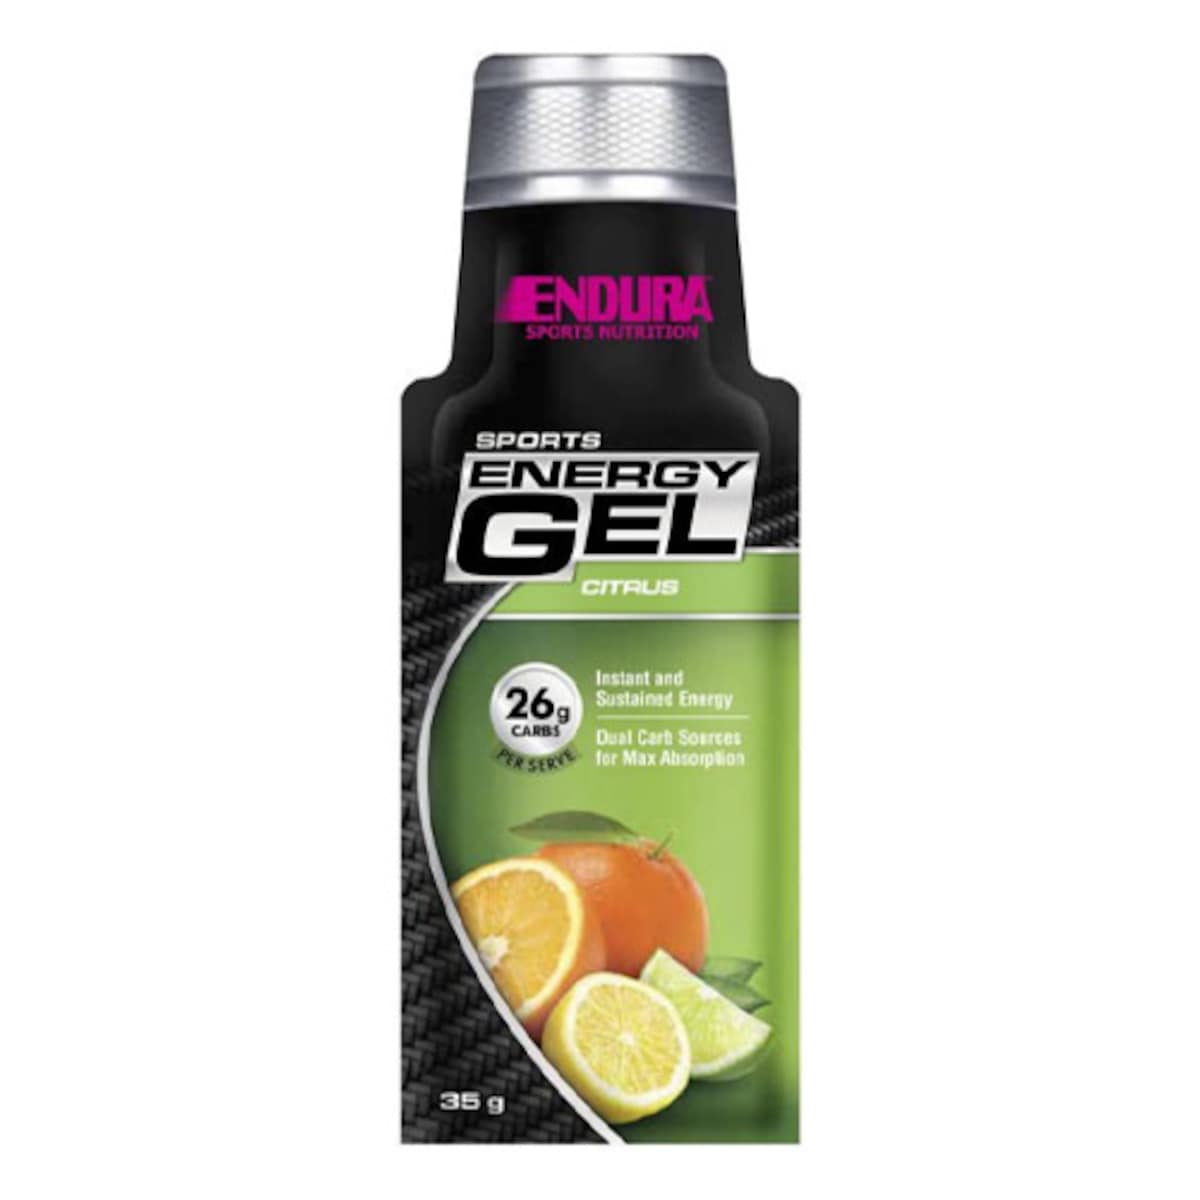 Endura Sports Energy Gel Citrus 35g Australia